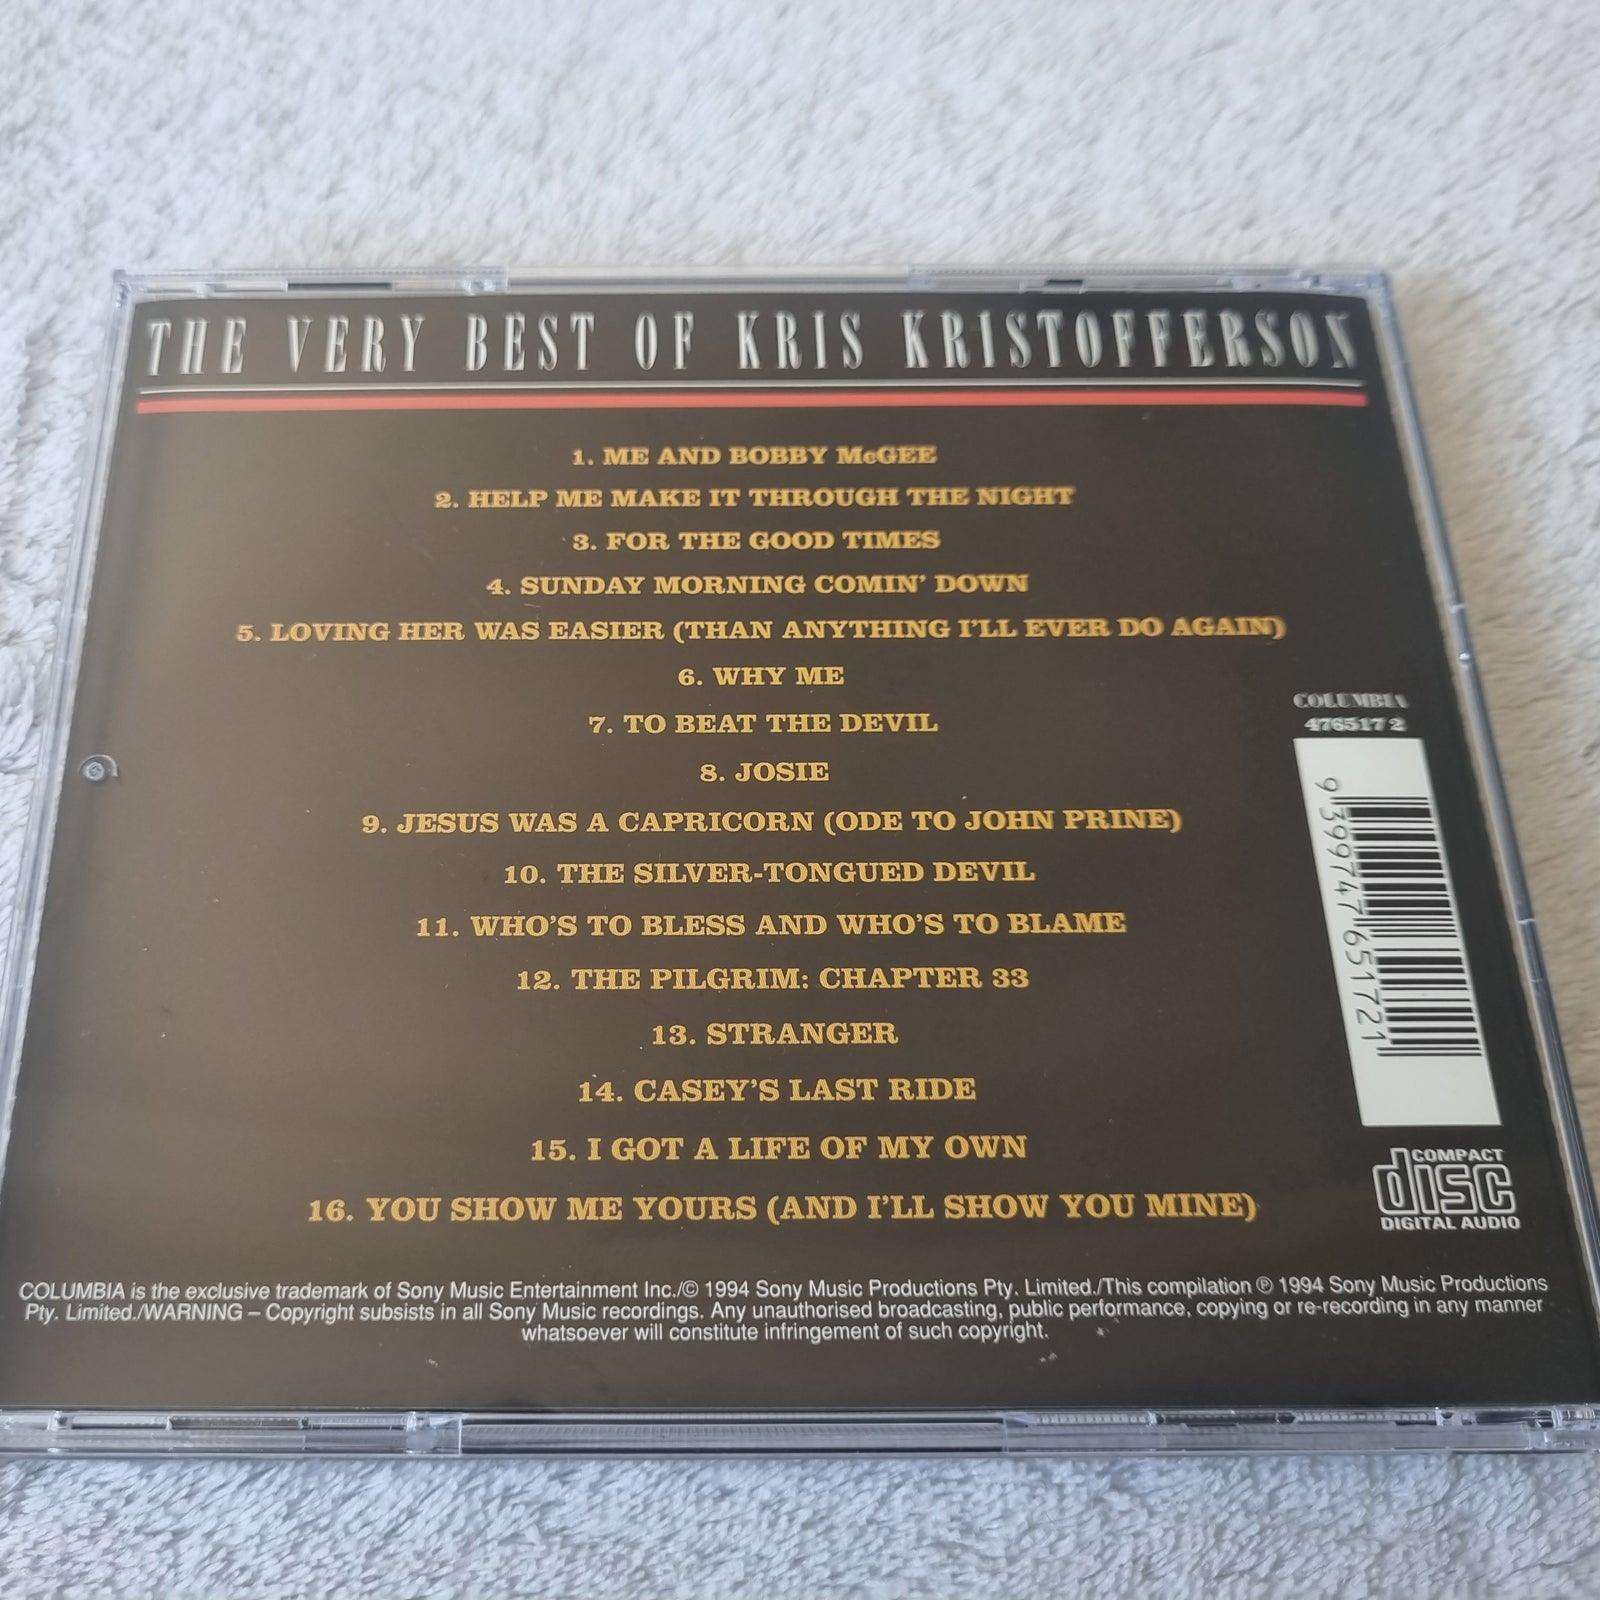 Kris Kristofferson - The Very Best of (CD)